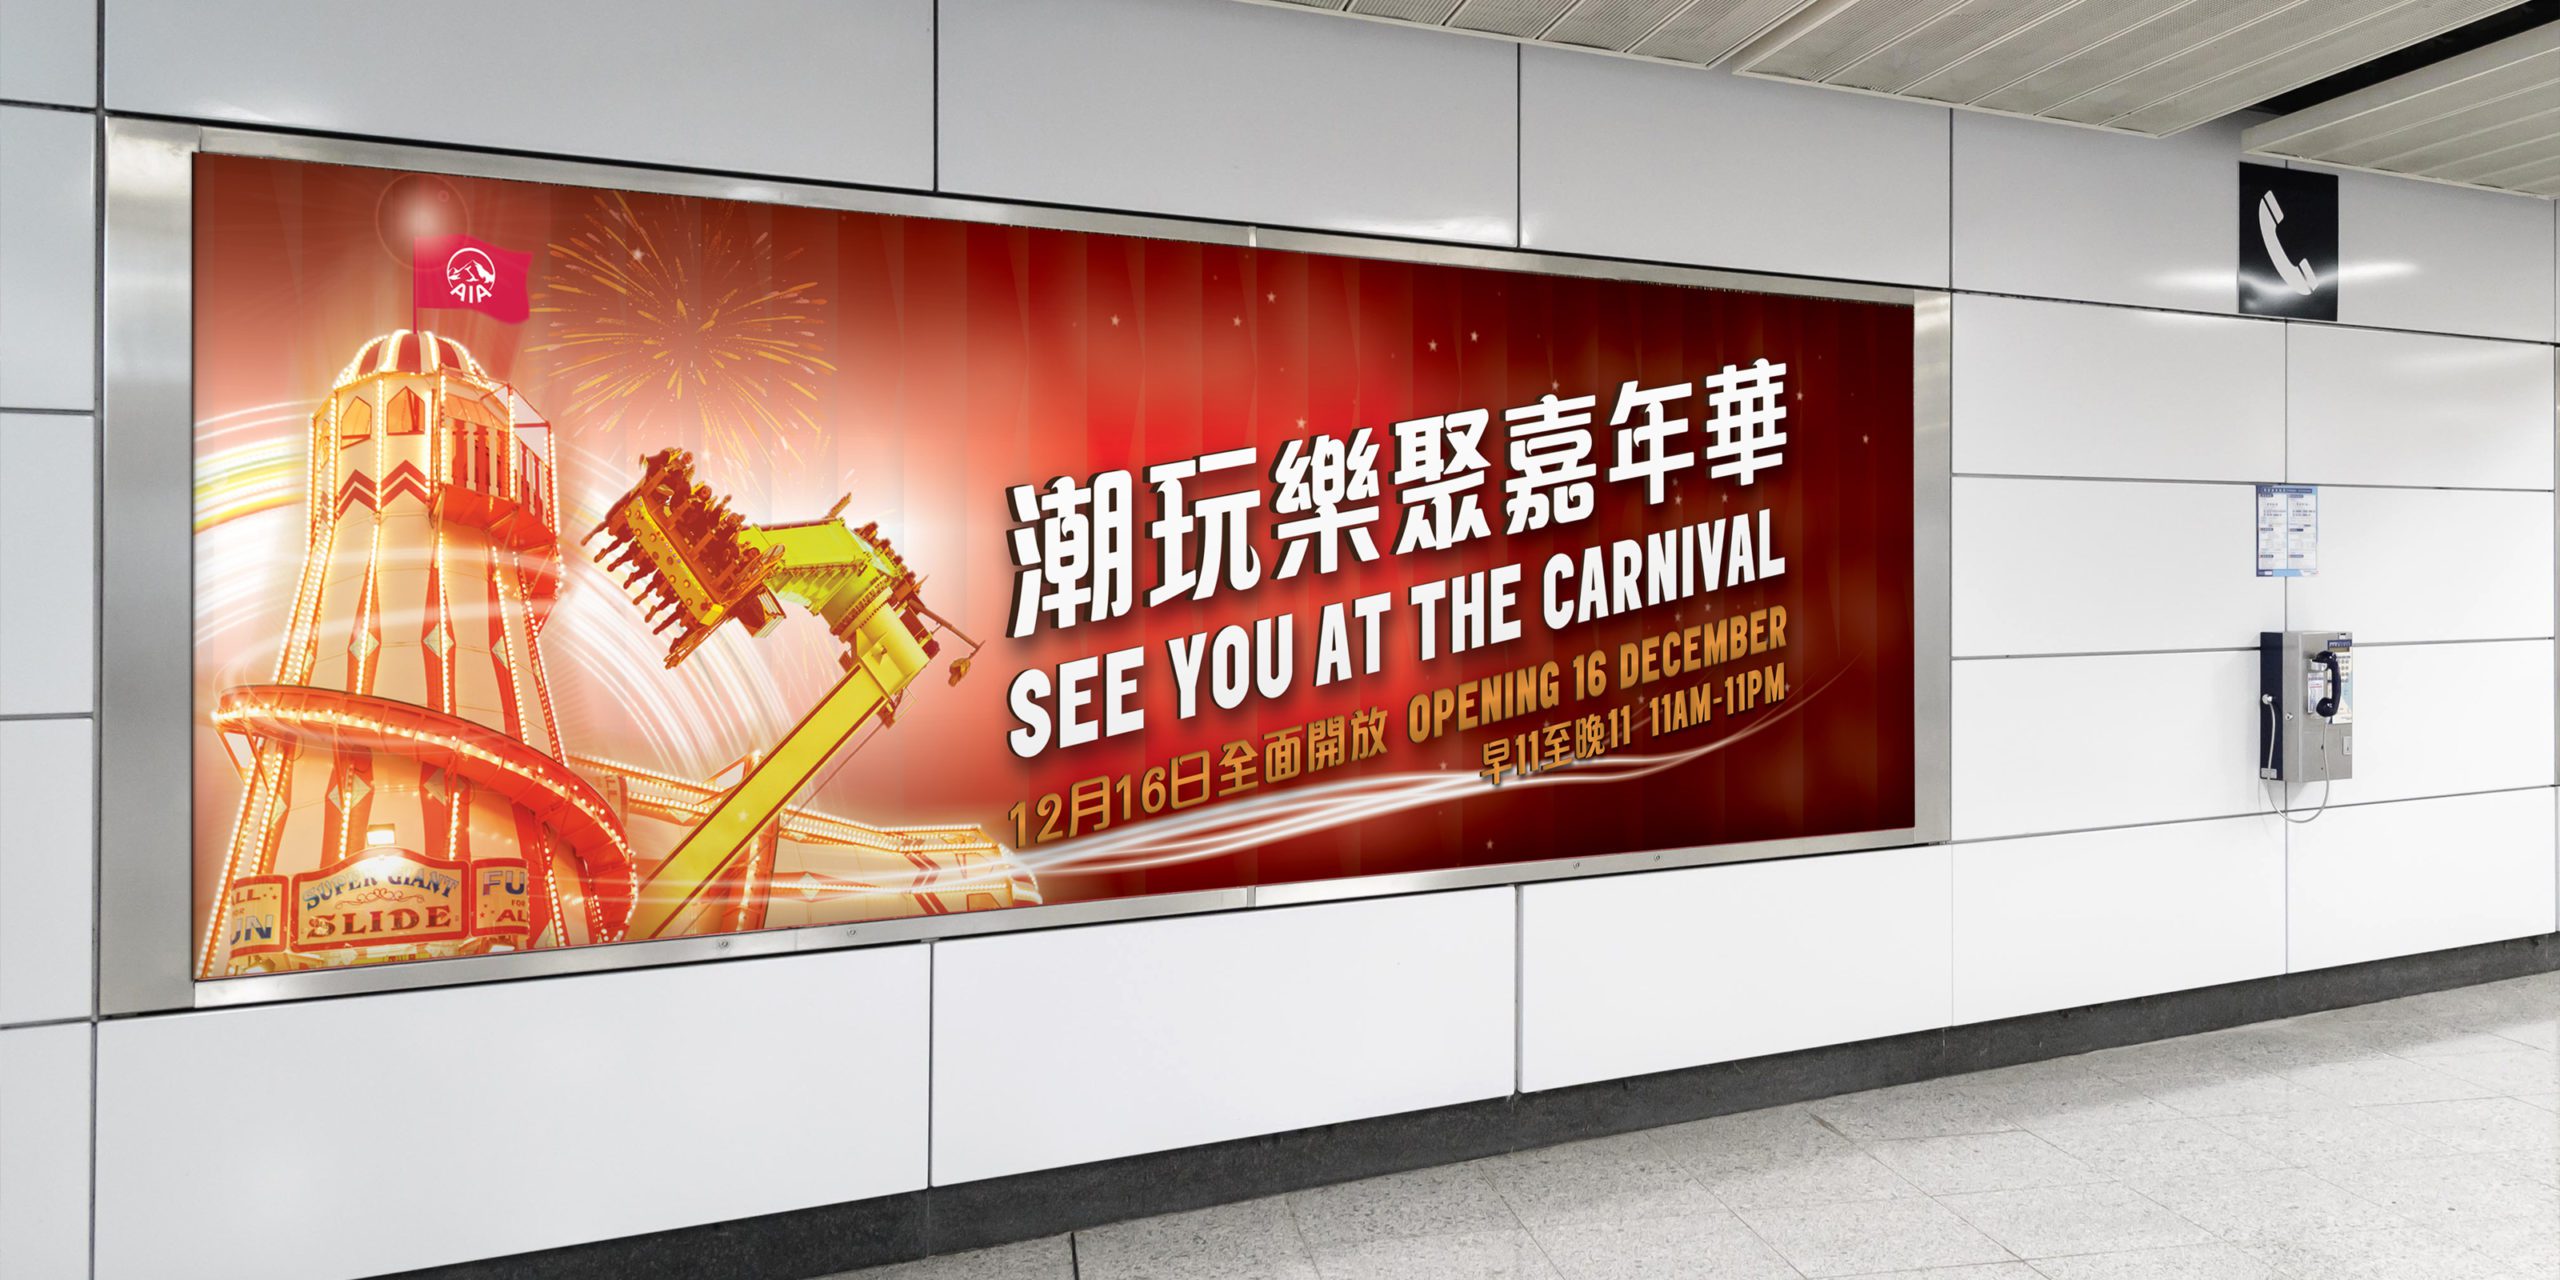 AIA Carnival Hong Kong Landscape Poster Design in MTR station